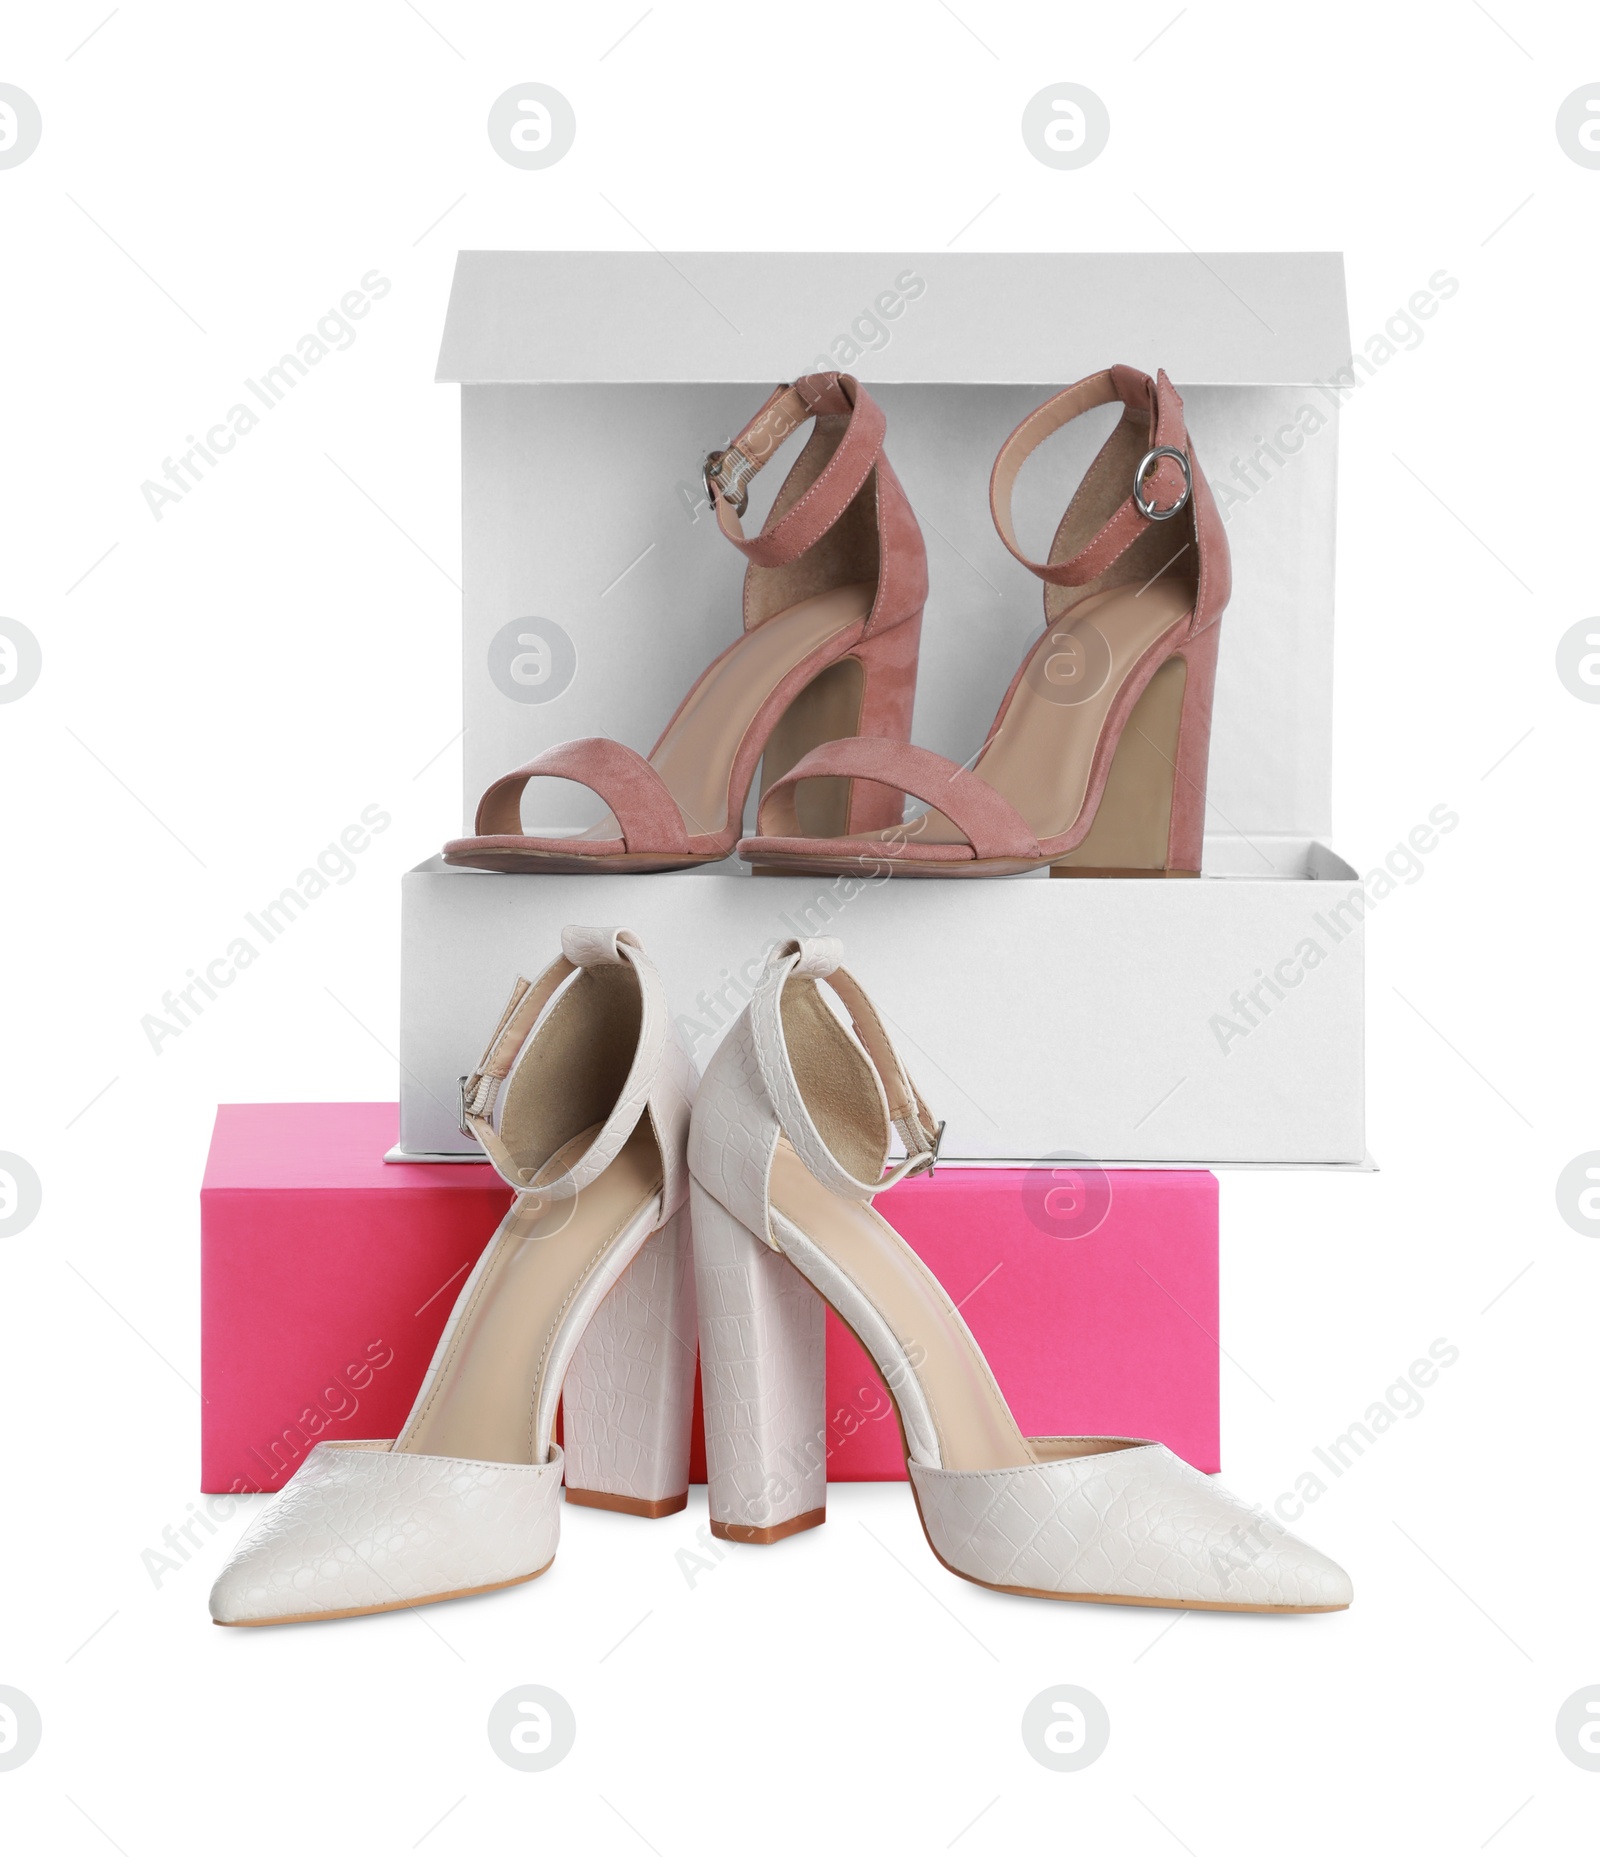 Photo of Stylish shoes and boxes on white background